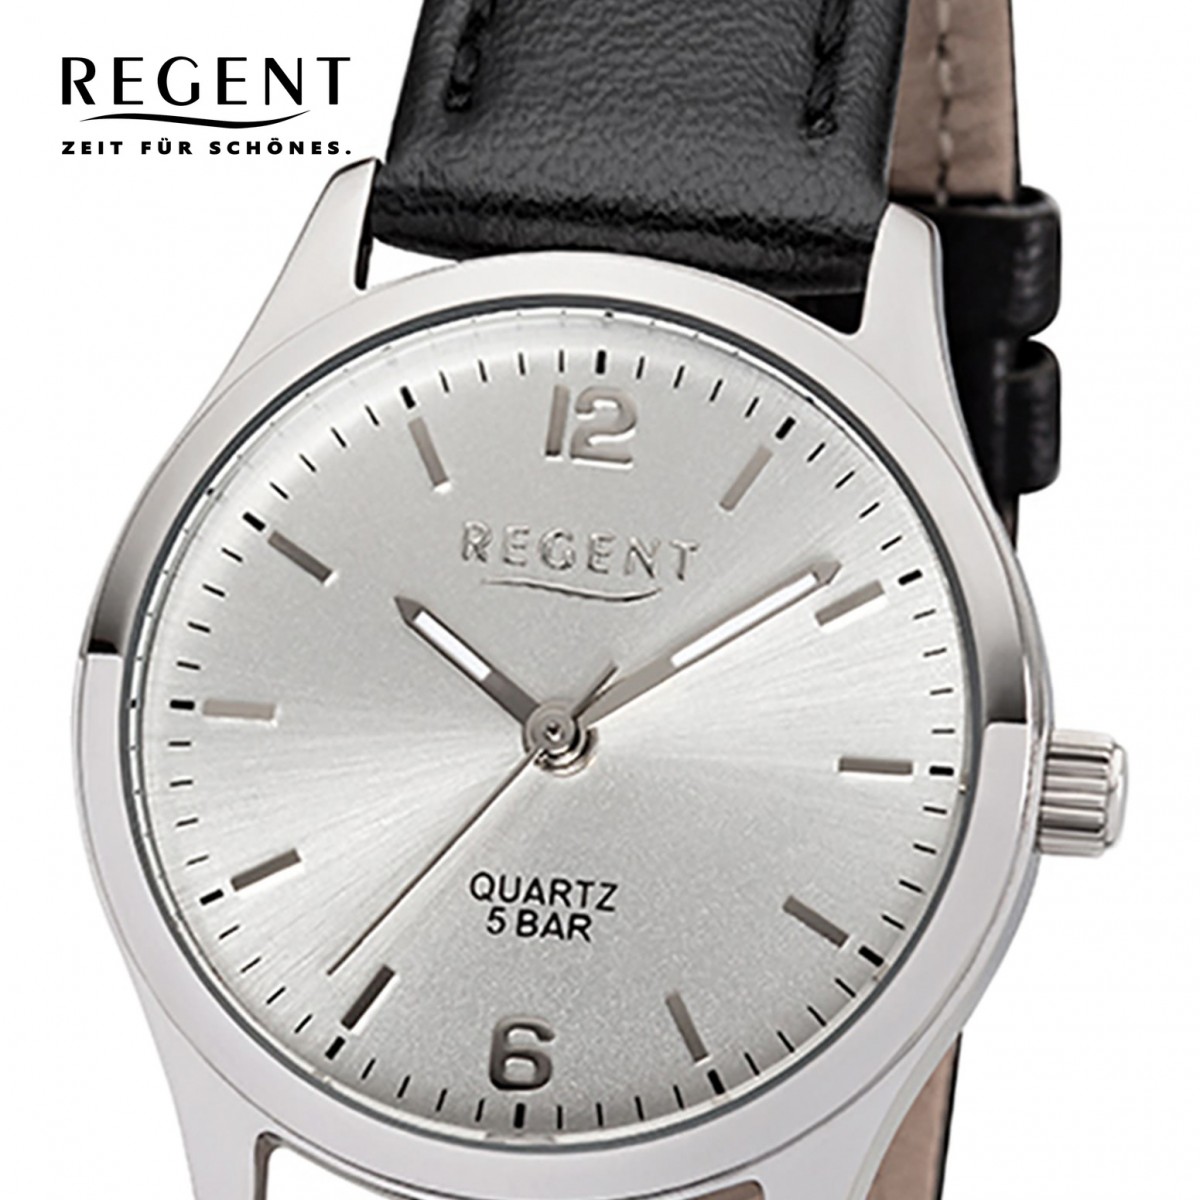 Damen-Armbanduhr 32-2113415 Quarz-Uhr UR2113415 schwarz Leder-Armband Regent